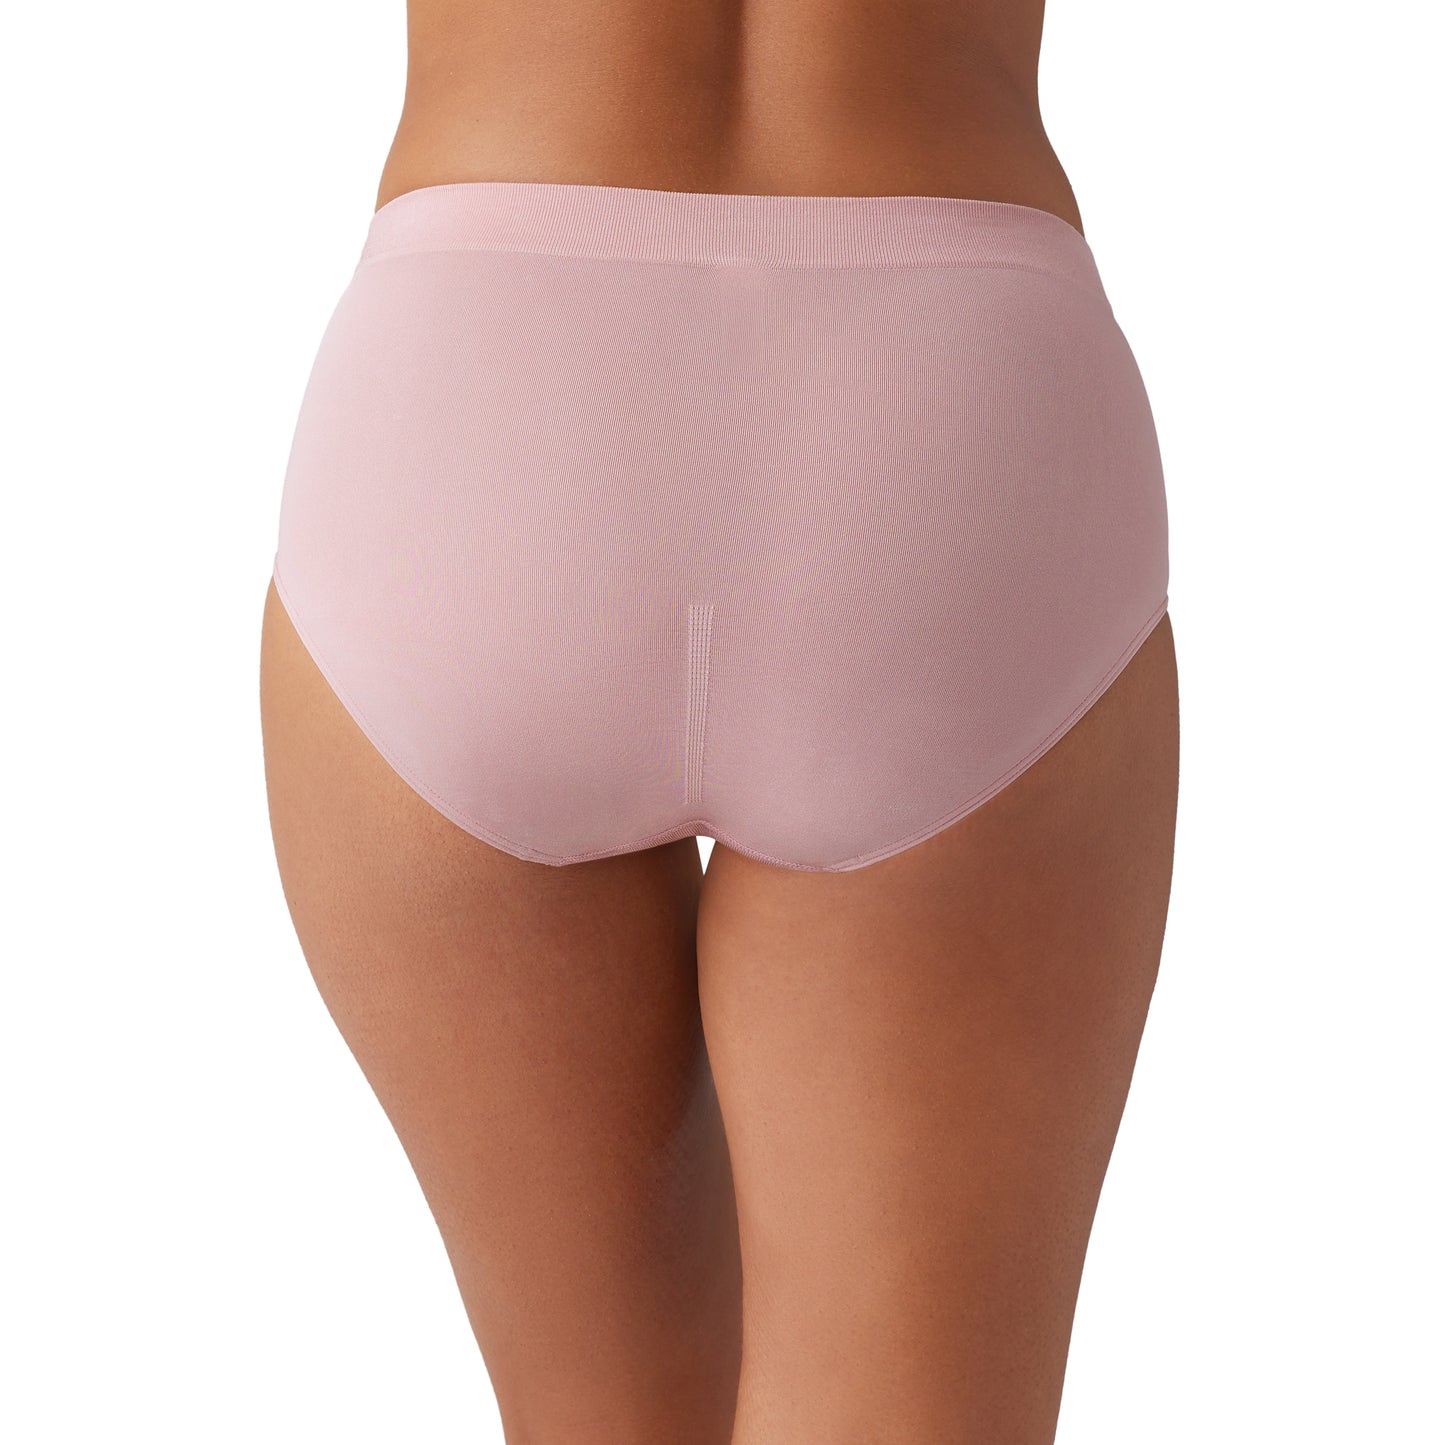 B-Smooth Seamless Full Brief - 838175 - Zephyr Pink Bras & Lingerie - Underwear - Brief Wacoal   